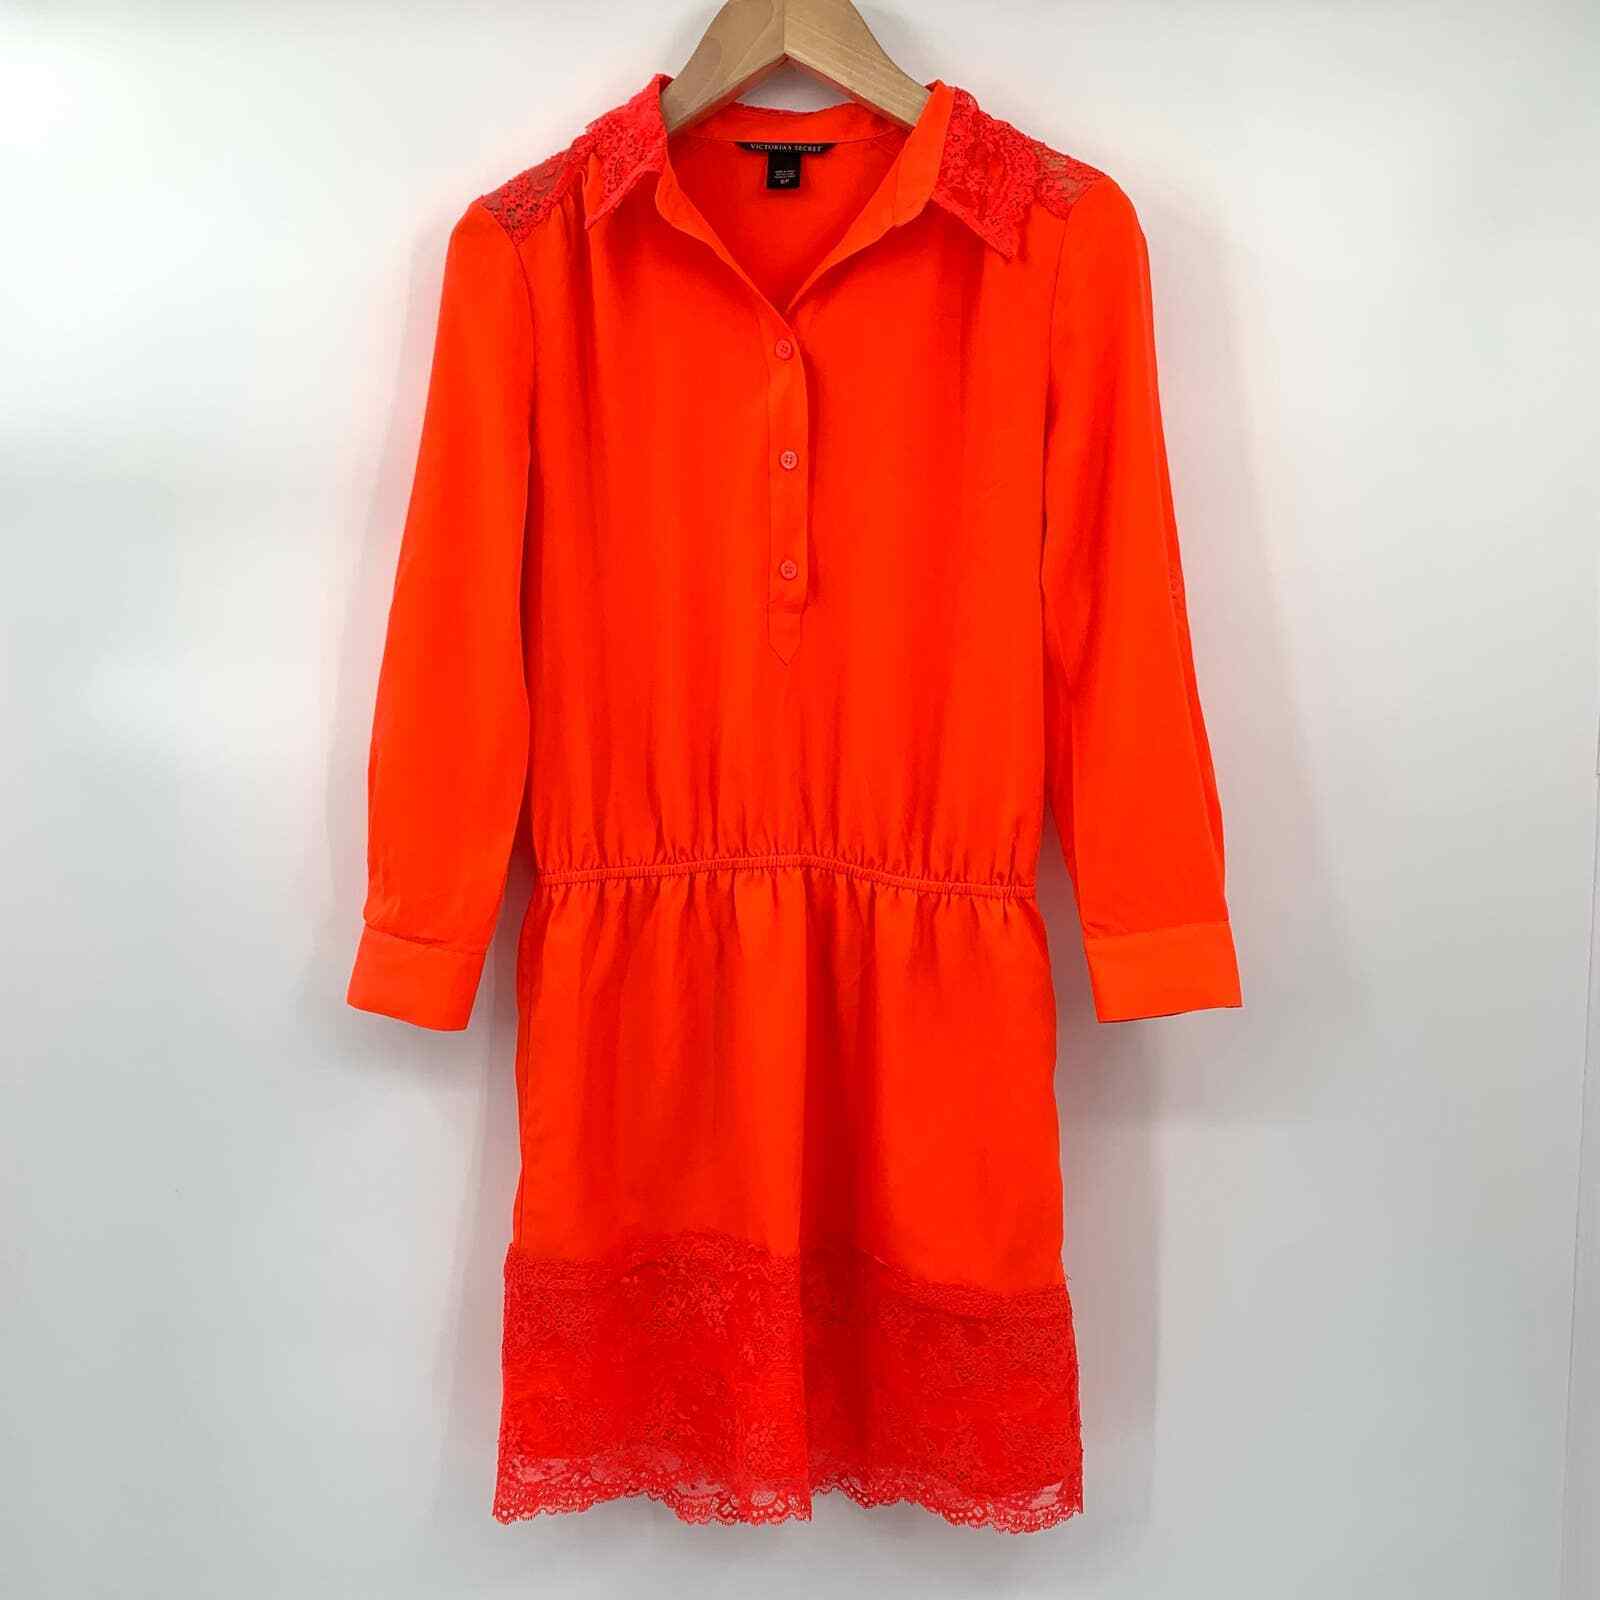 Victoria’s Secret Womens Size Small Shirt Dress Vibrant Coral/Orange